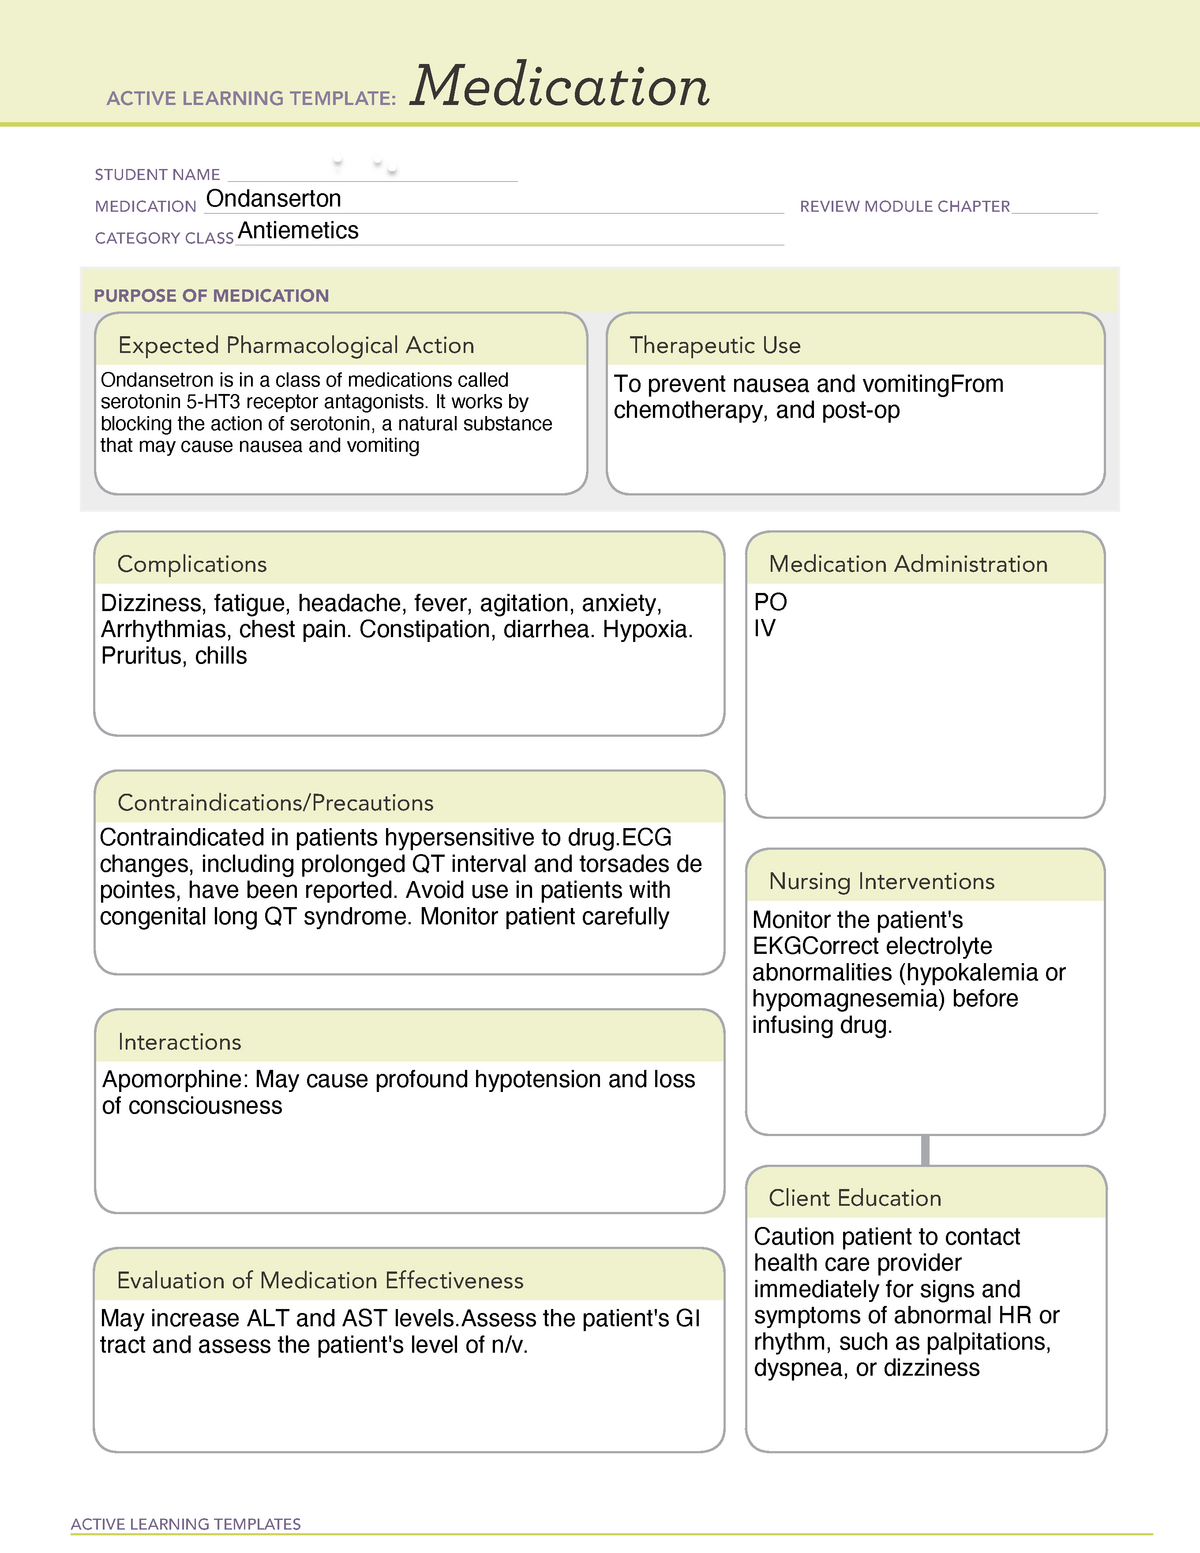 Ondanserton 2 medication sheet ati template for med surge clinical